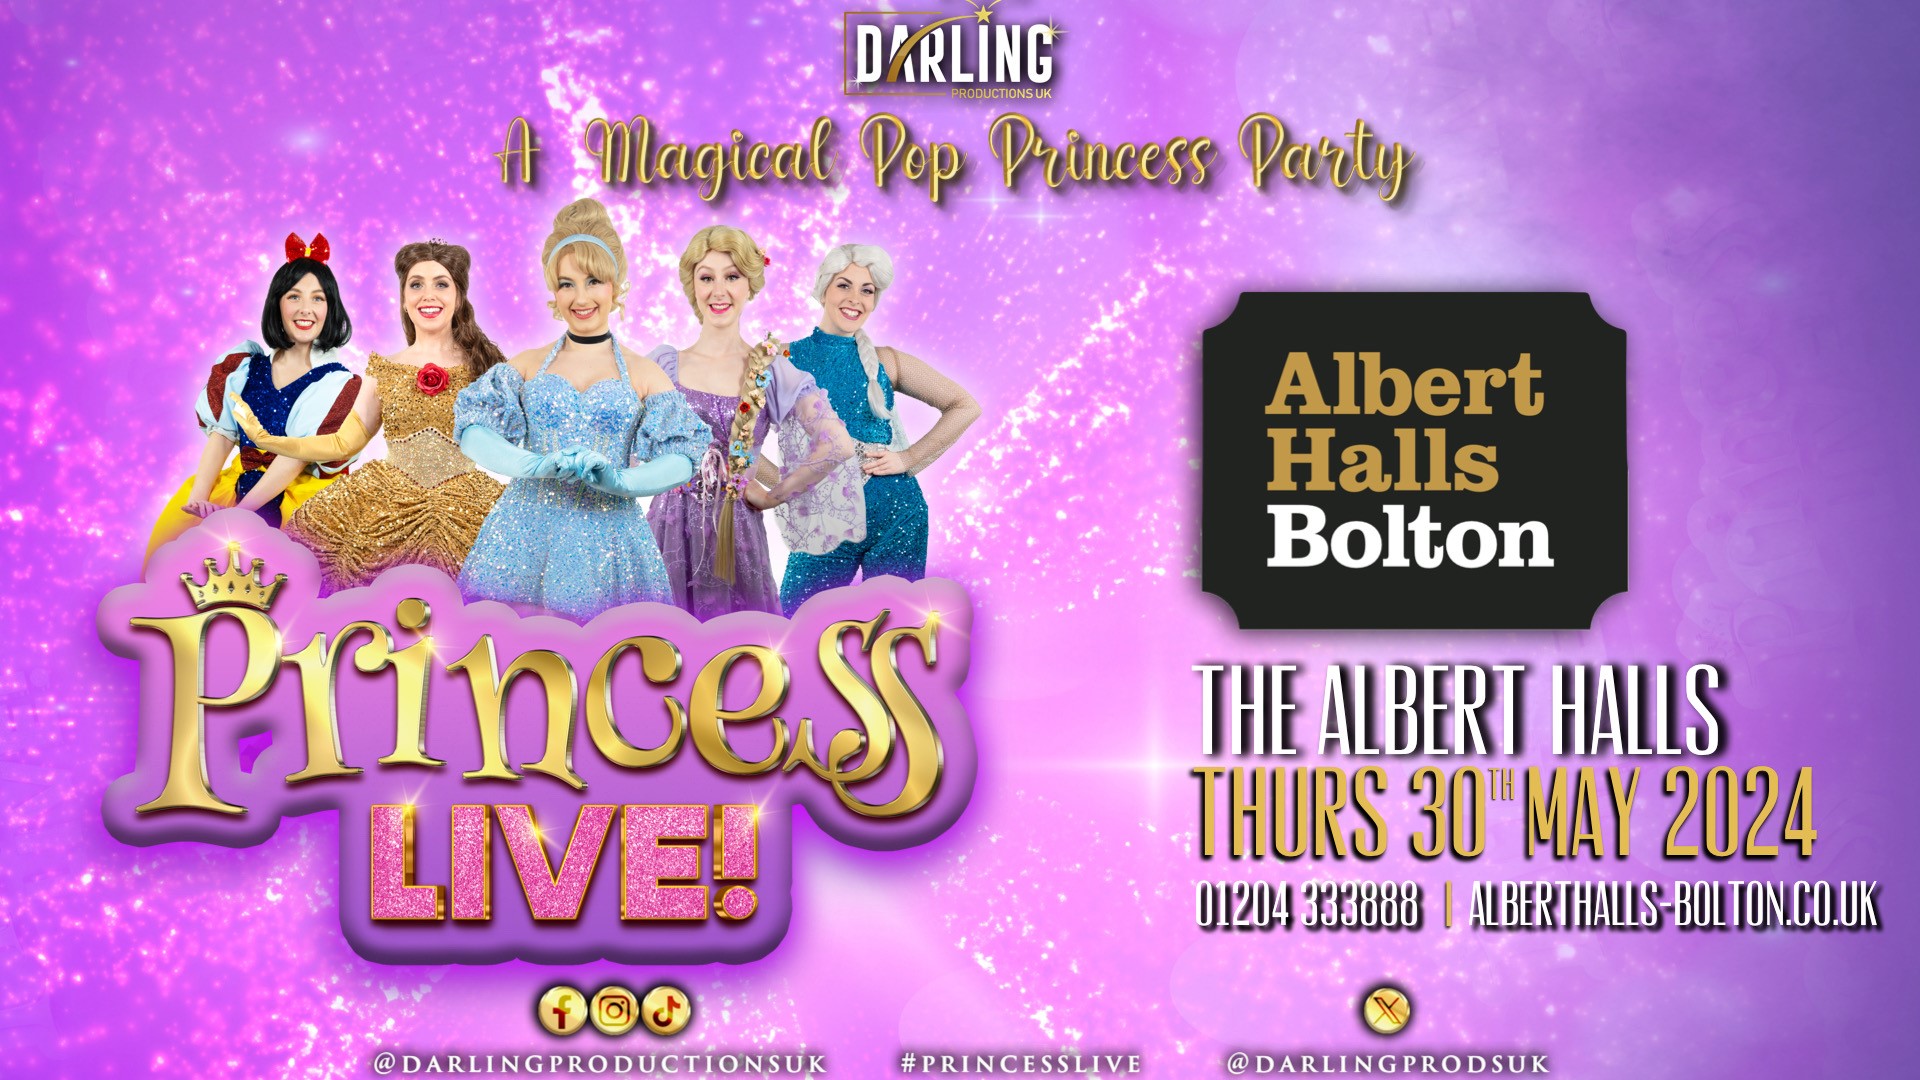 Princess Live: The Ultimate Princess Pop Party!